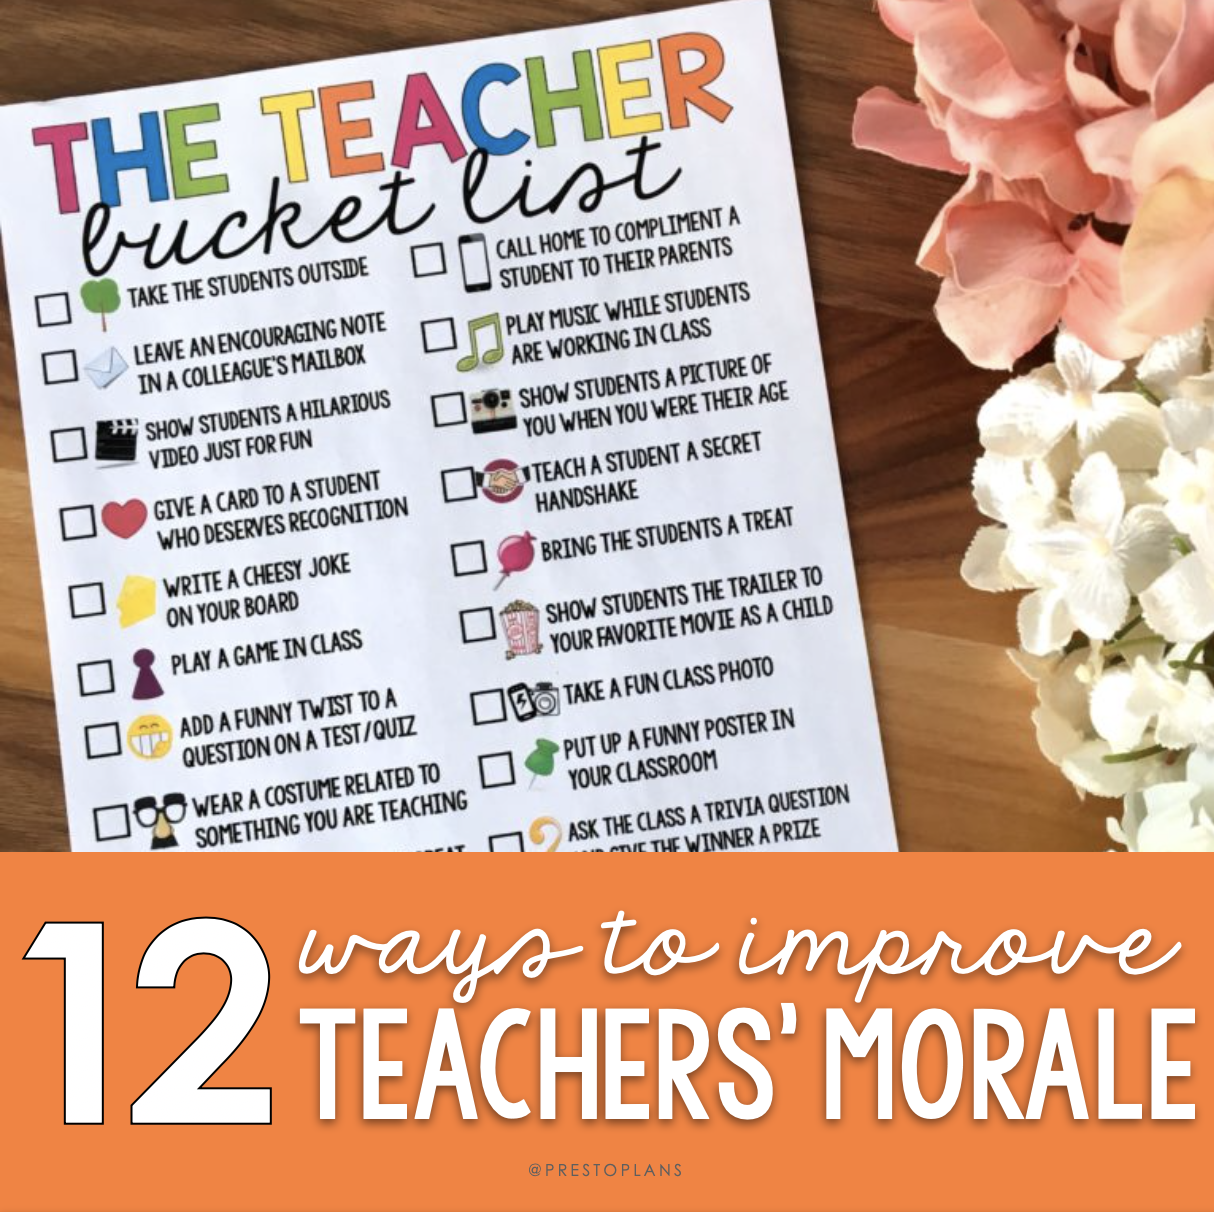 12 Ways to improve teacher morale